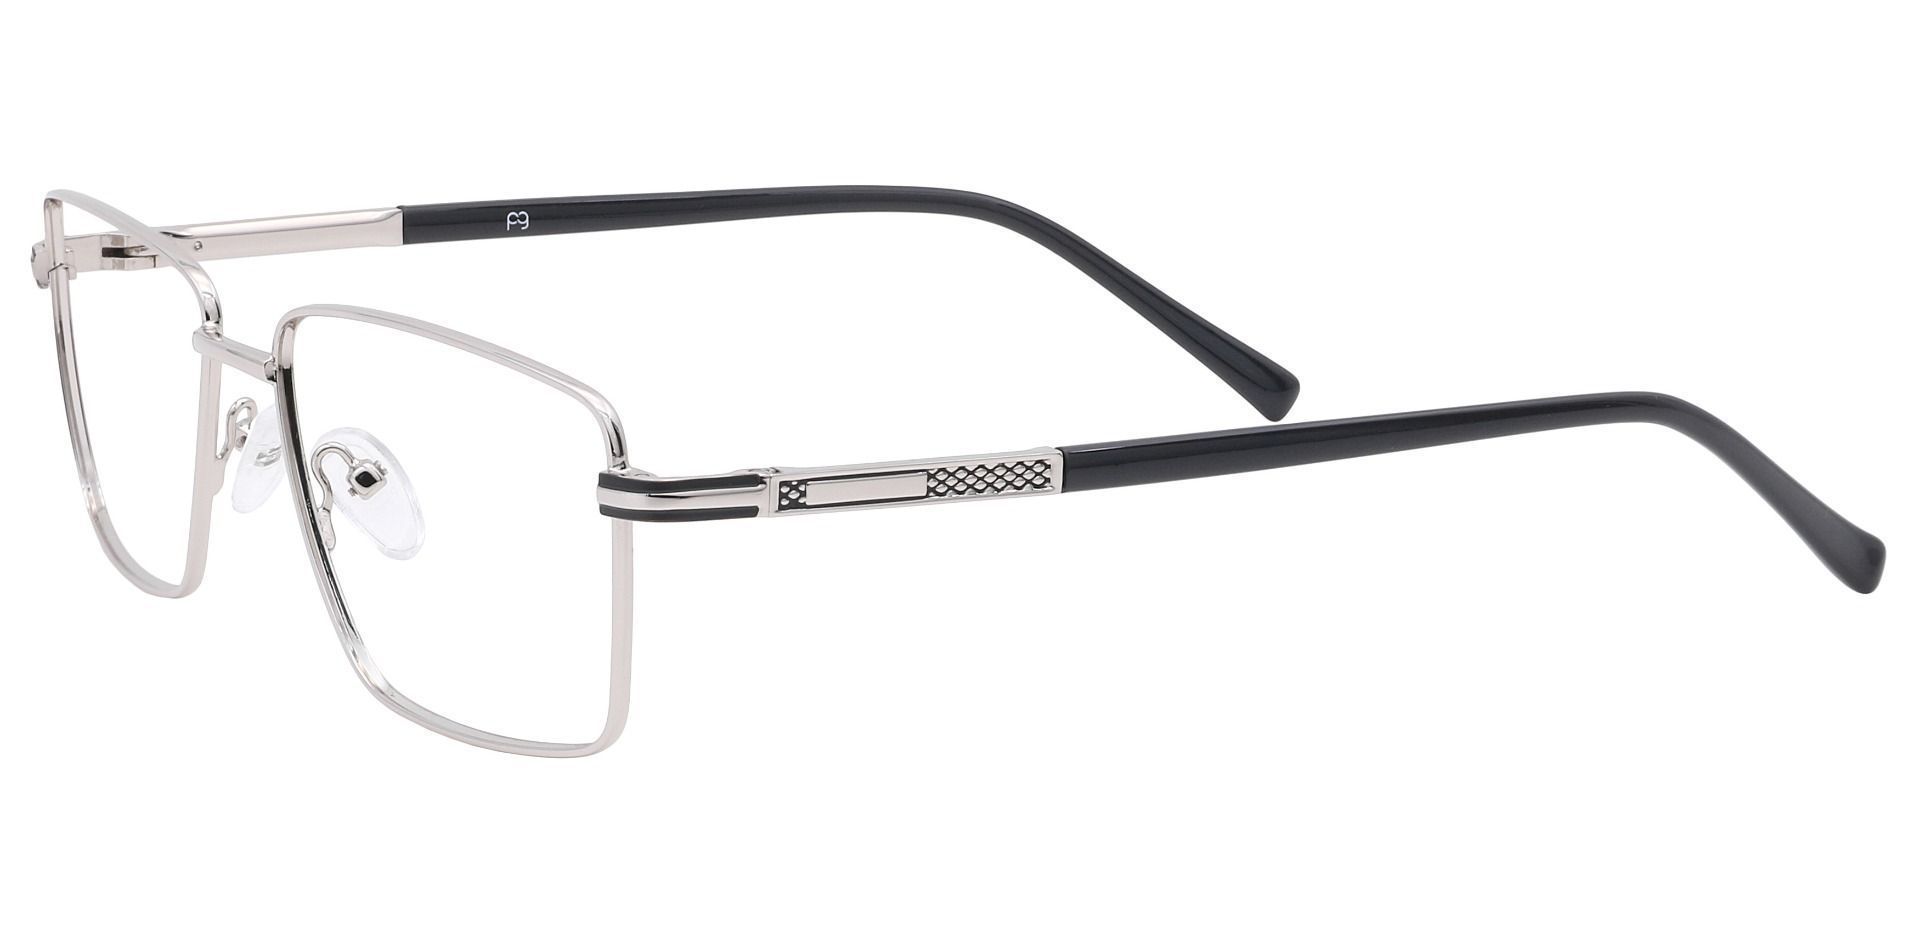 Daniel Rectangle Lined Bifocal Glasses - Silver